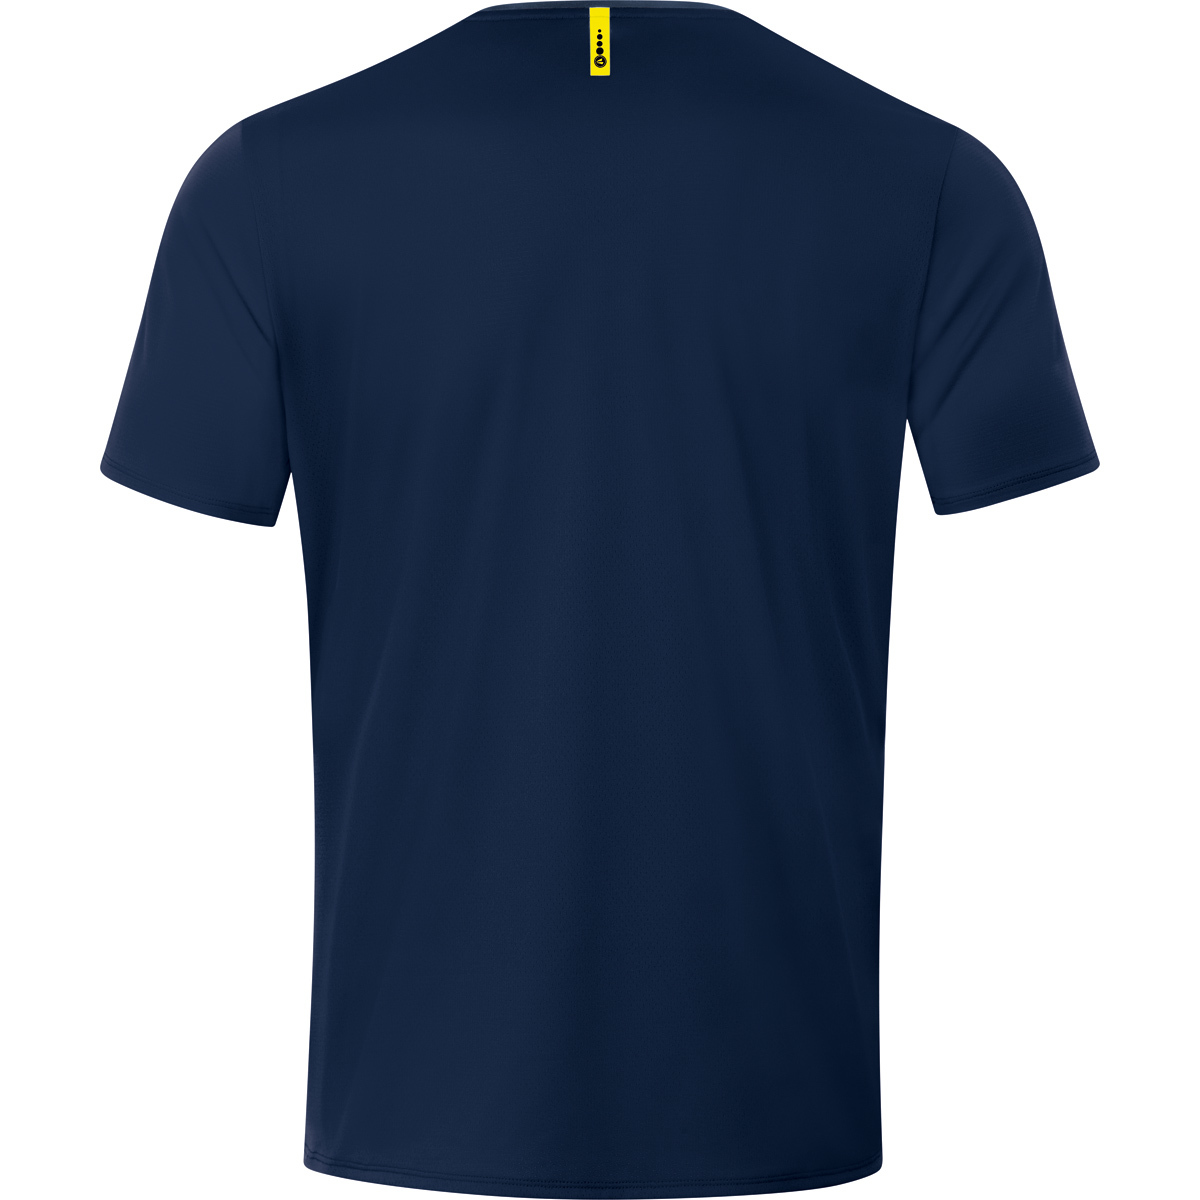 JAKO T-Shirt Champ 2.0 marine/darkblue/neongelb, Gr. XXL, 6120 Herren